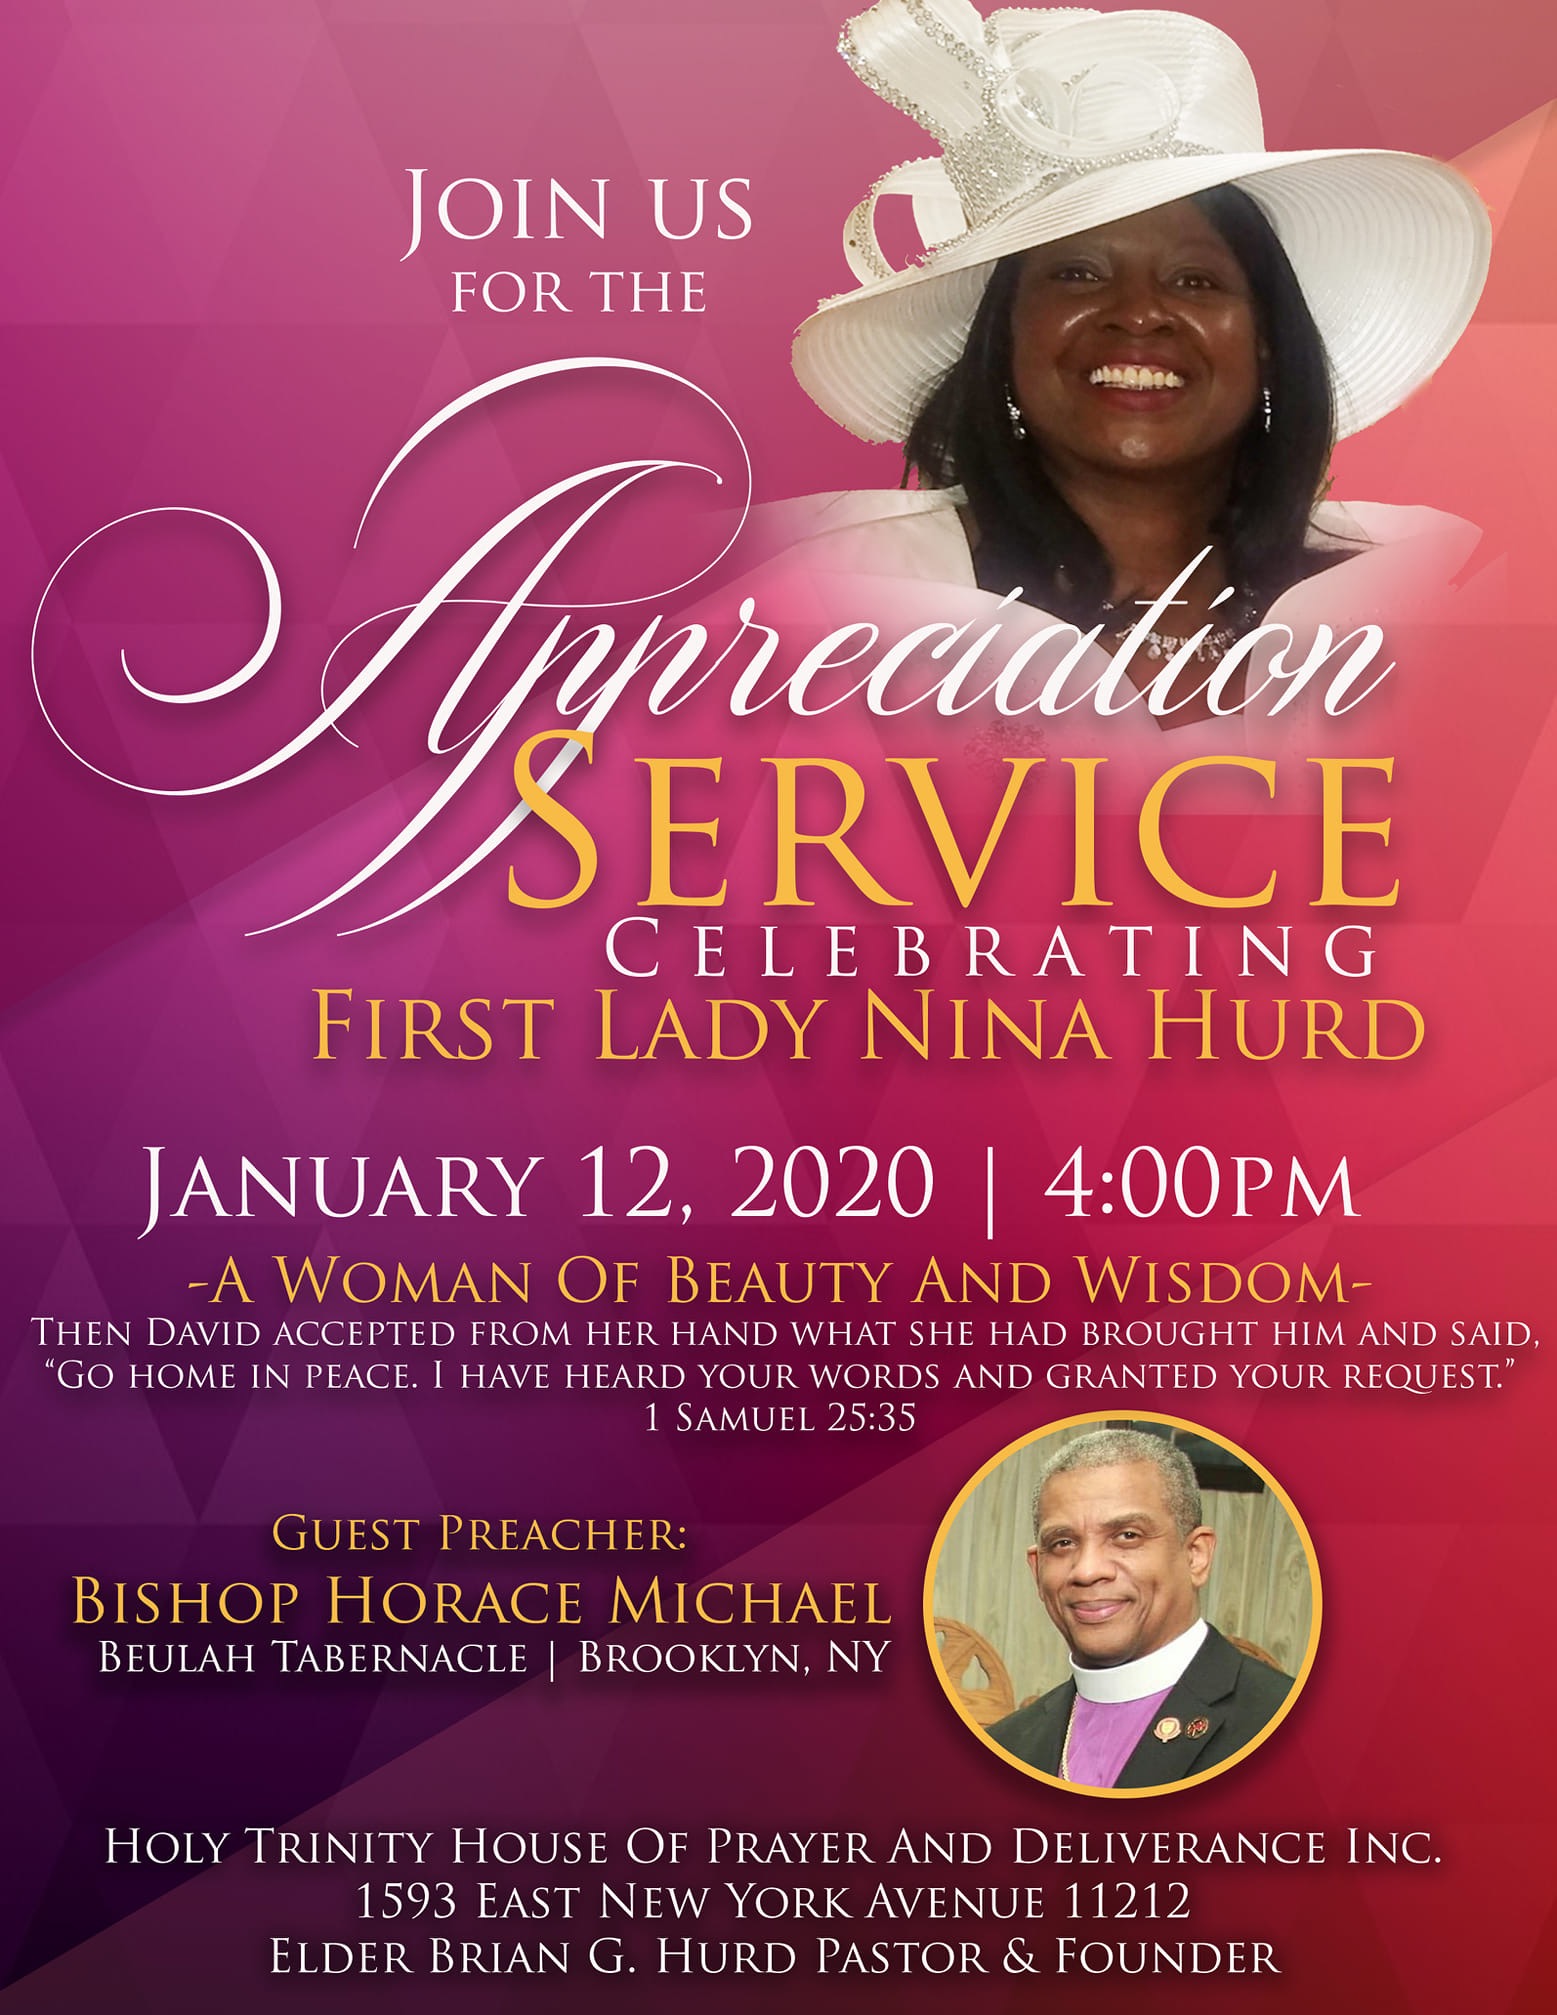 Appreciation Service Celebrating Lady Nina Hurd @ Holy Trinity House of Prayer and Deliverance